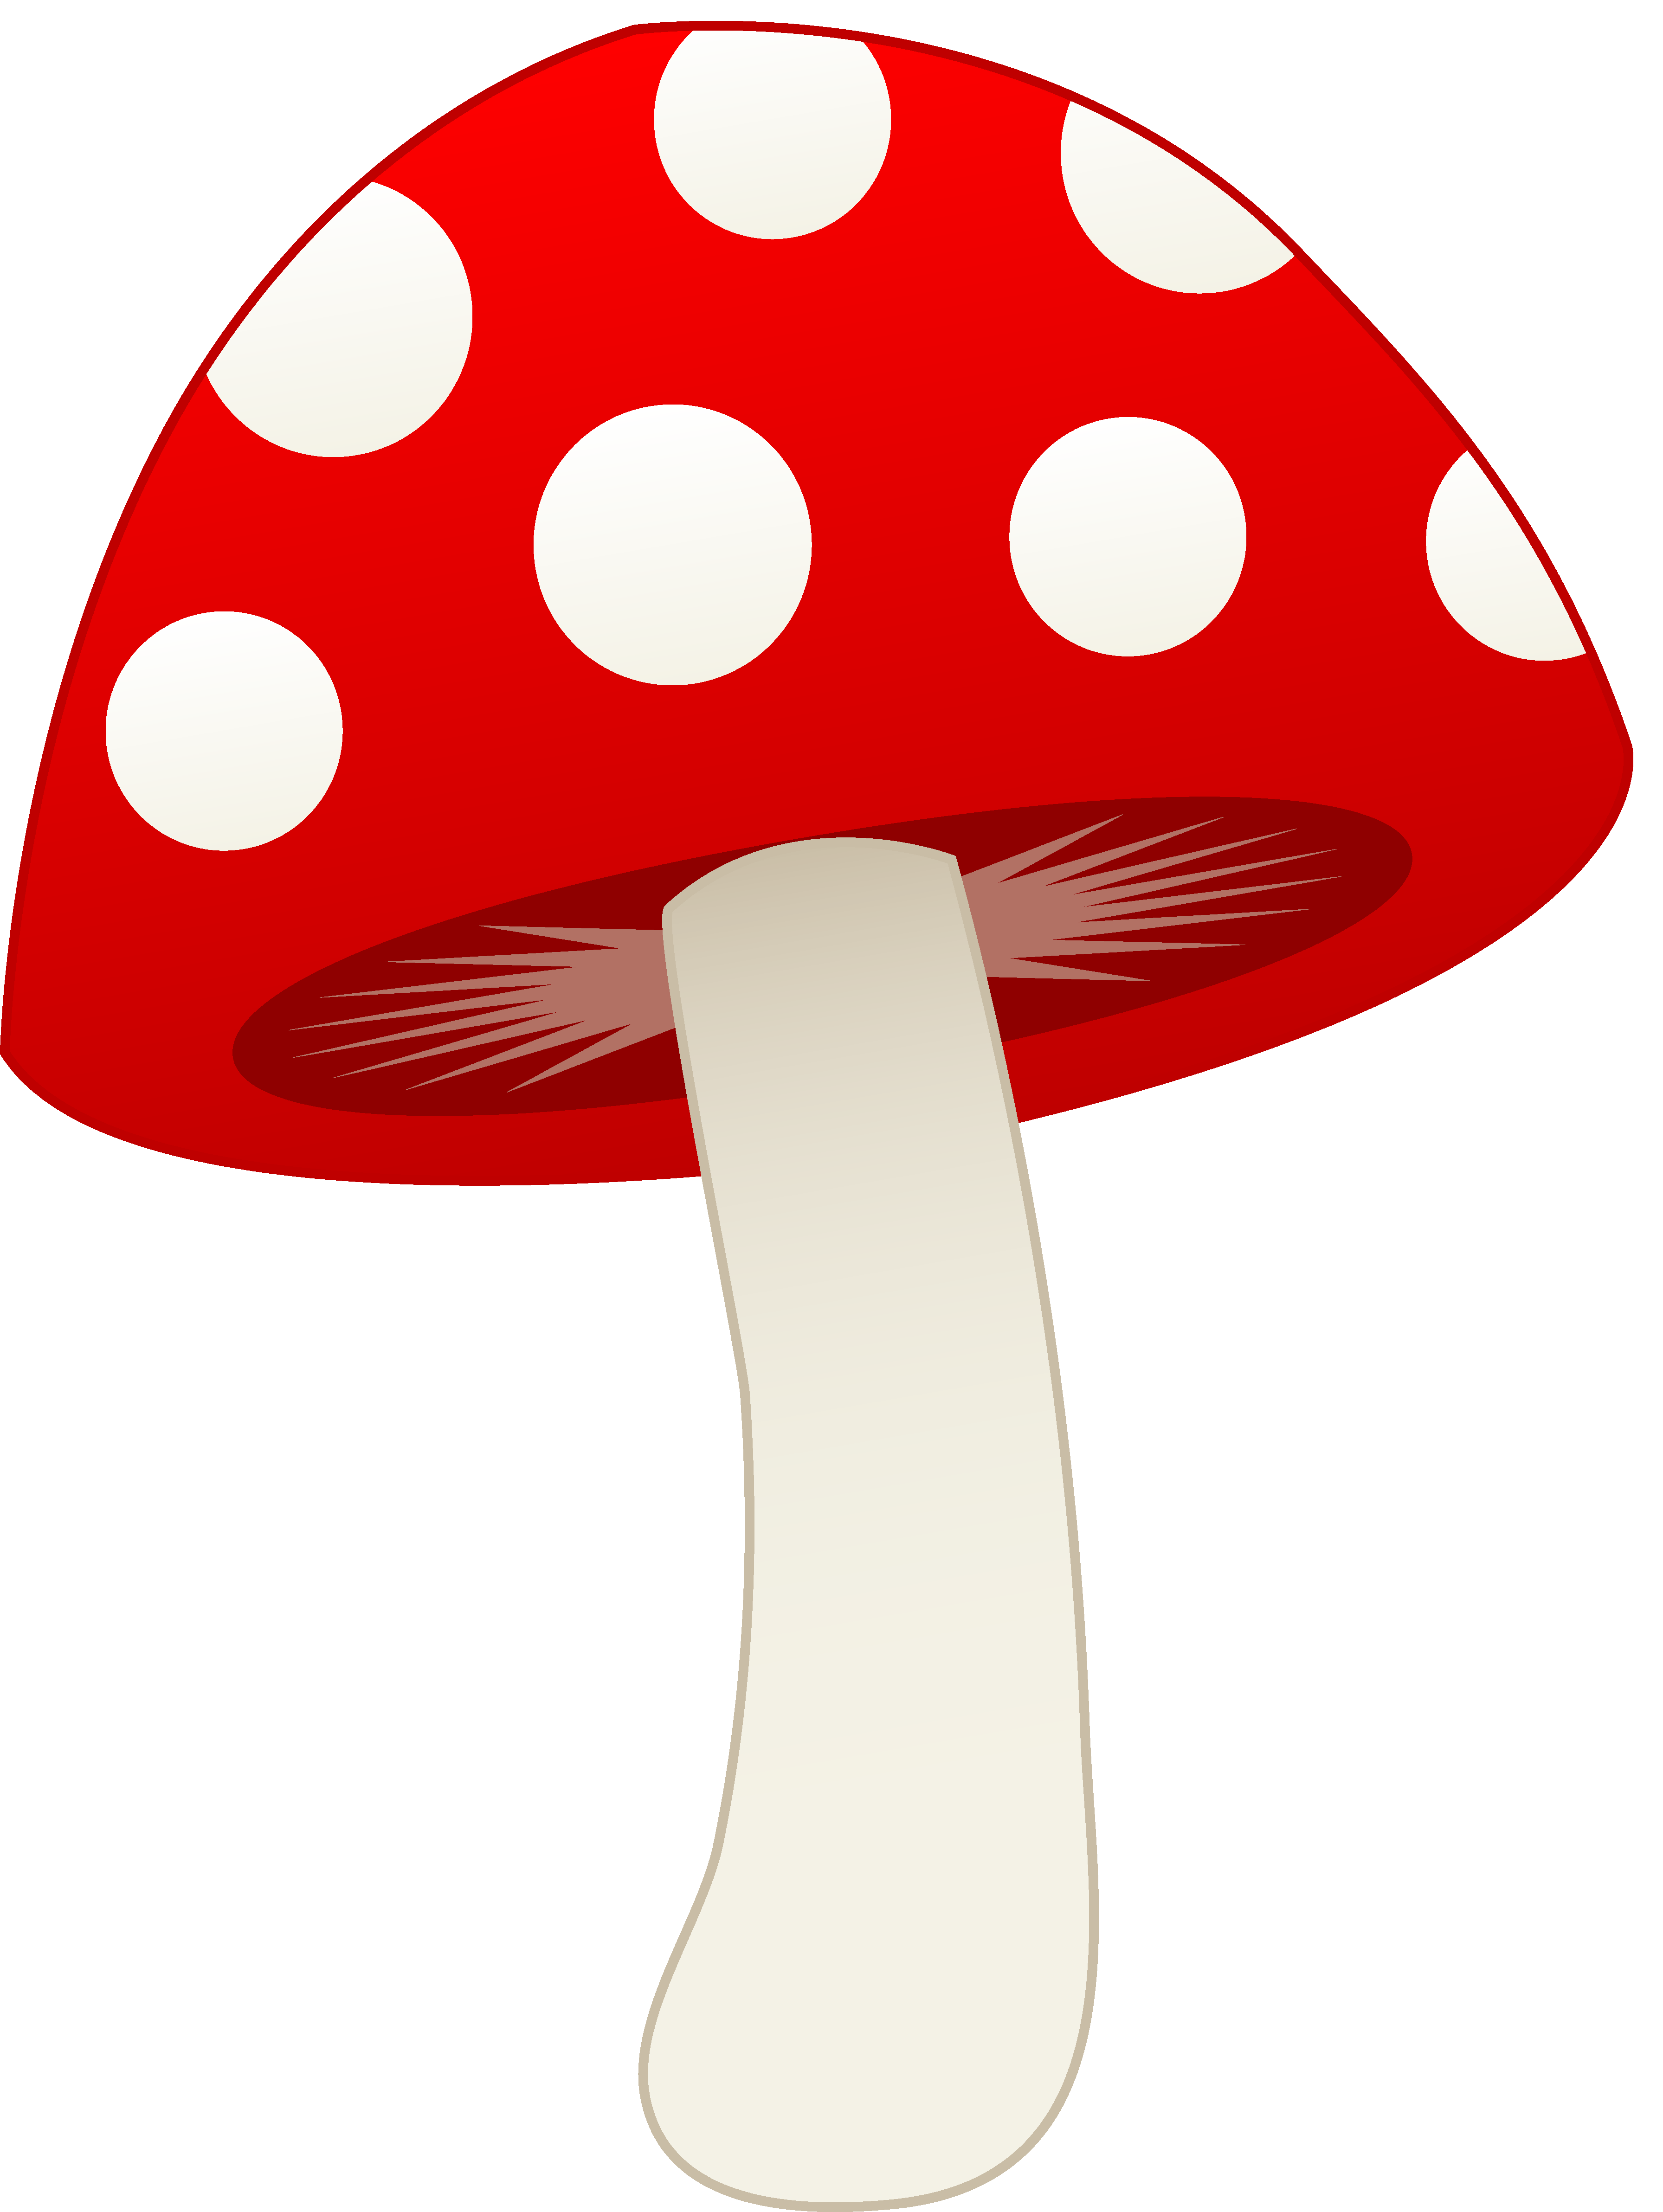 Red and White Mushroom - Free Clip Art